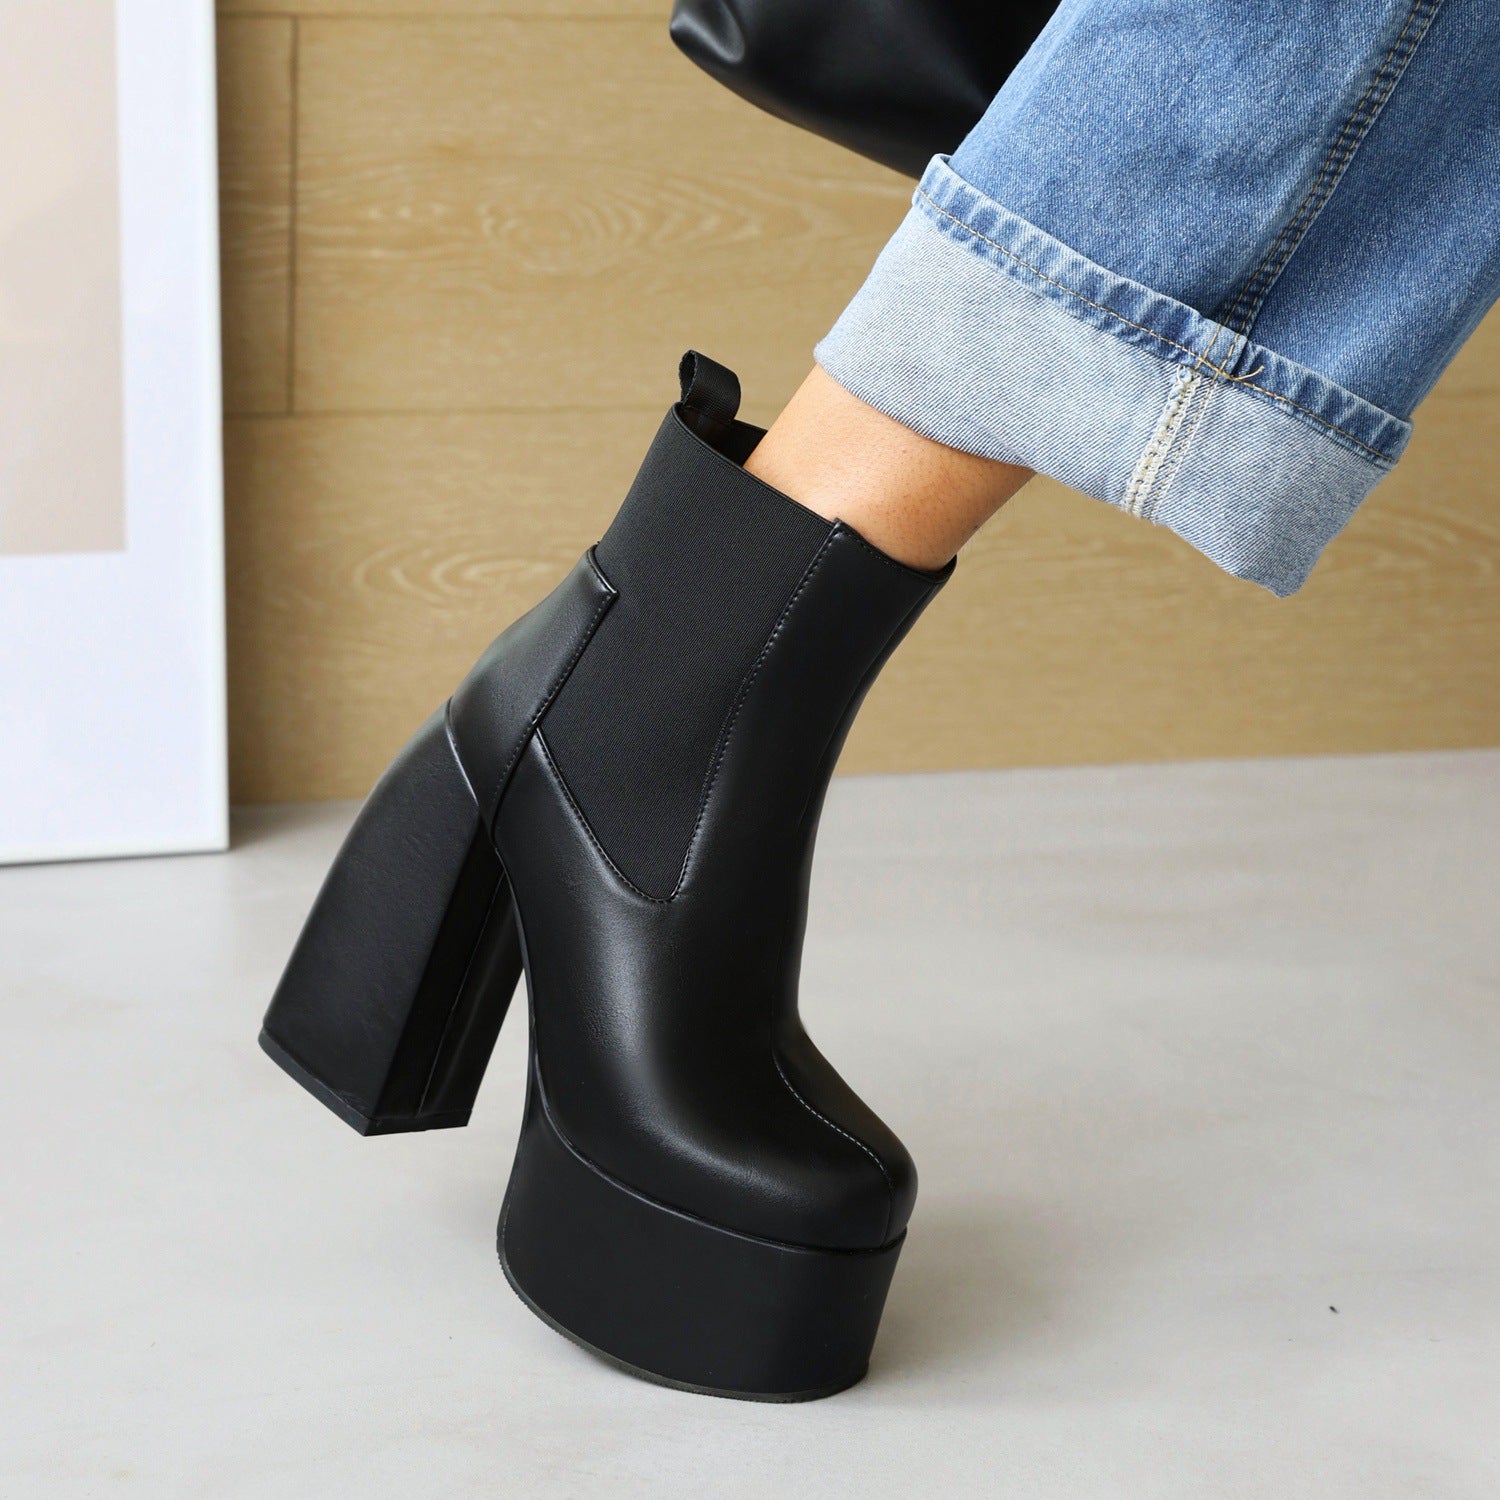 Bigsizeheels Punk thick-heeled slim fashion boots - Black freeshipping - bigsizeheel®-size5-size15 -All Plus Sizes Available!